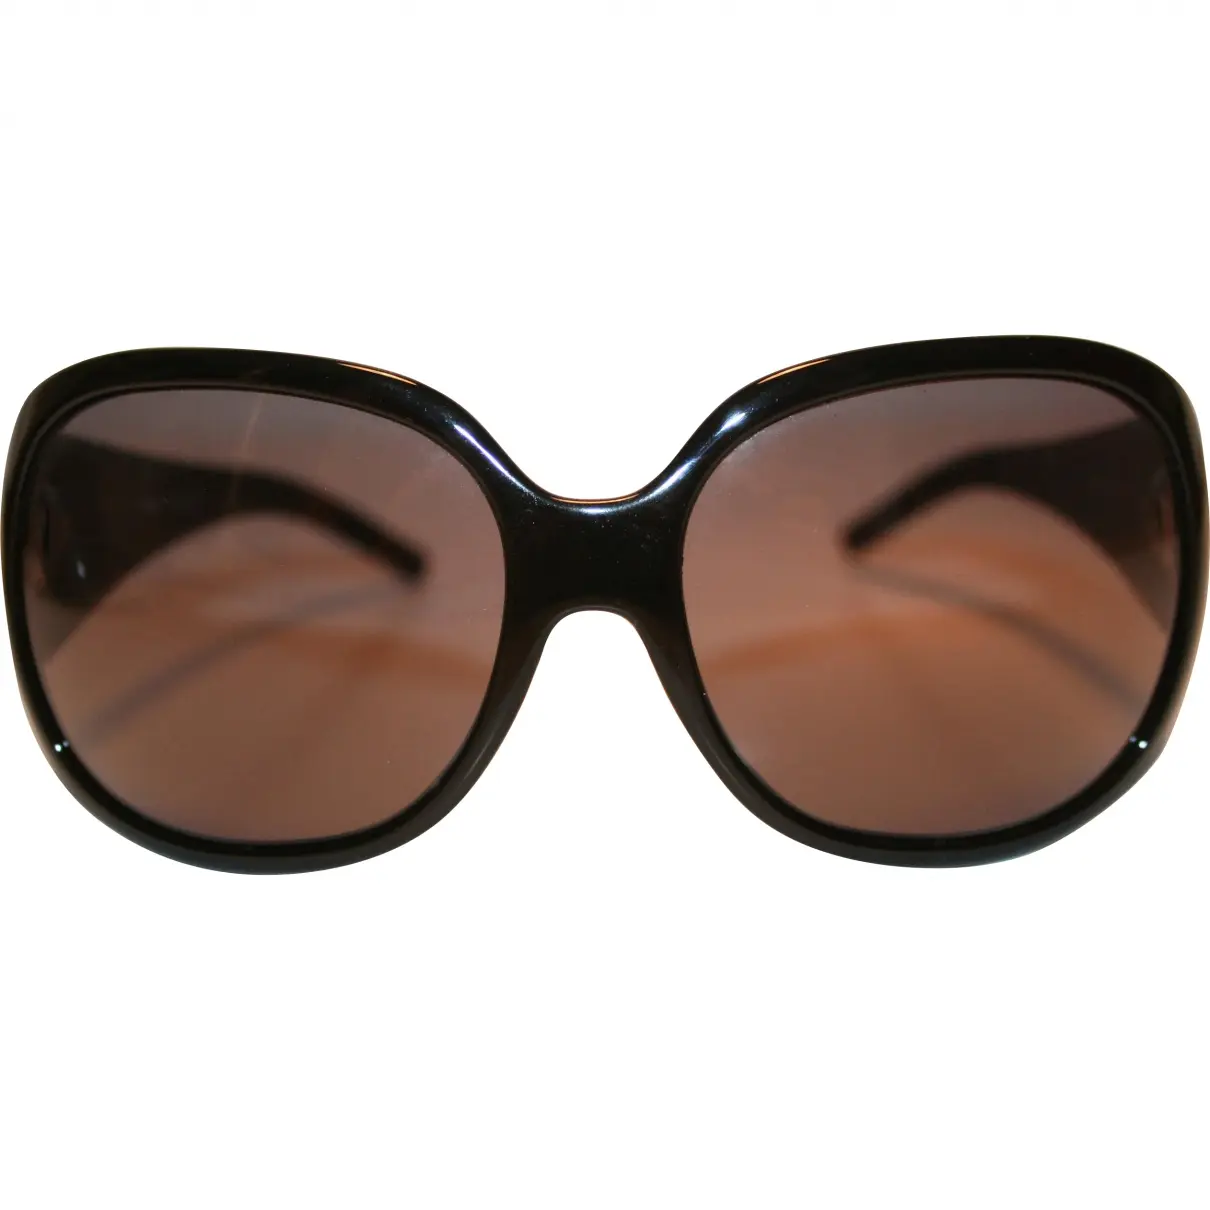 Black Plastic Sunglasses Fendi